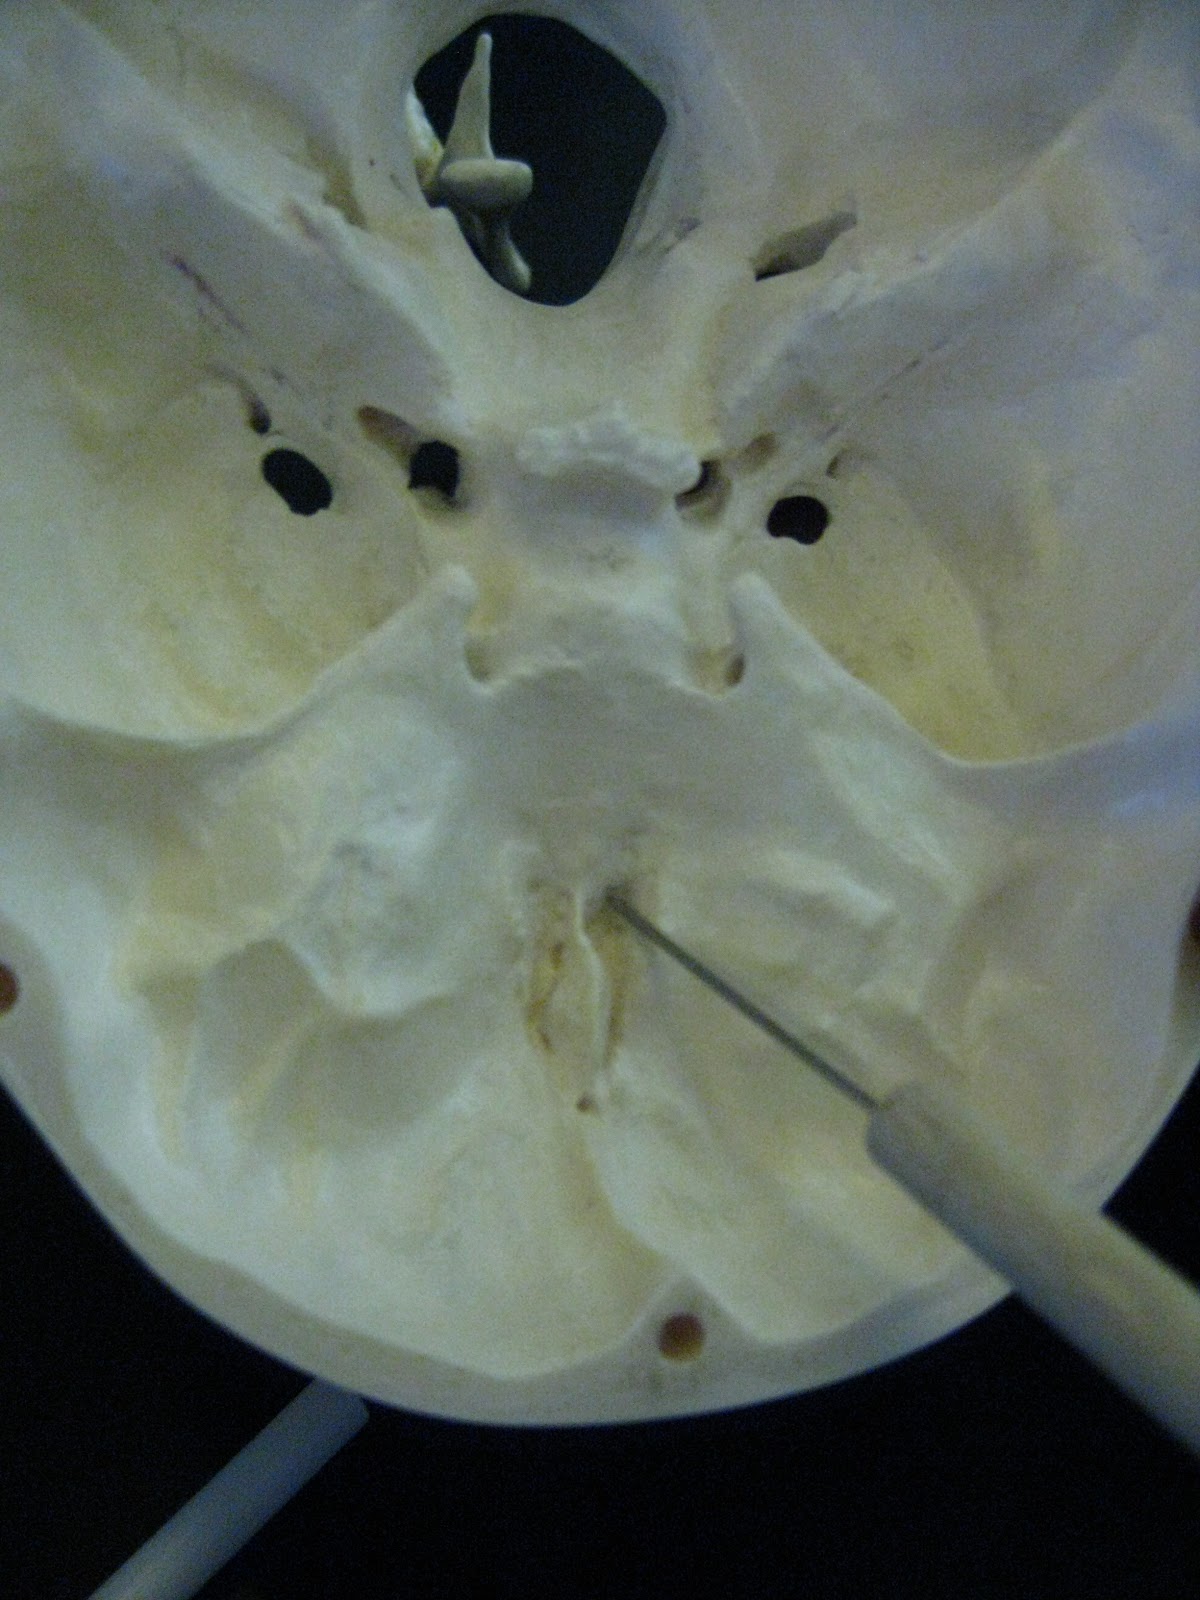 Boned: Human Skull - cribiform plate (of ethmoid bone)